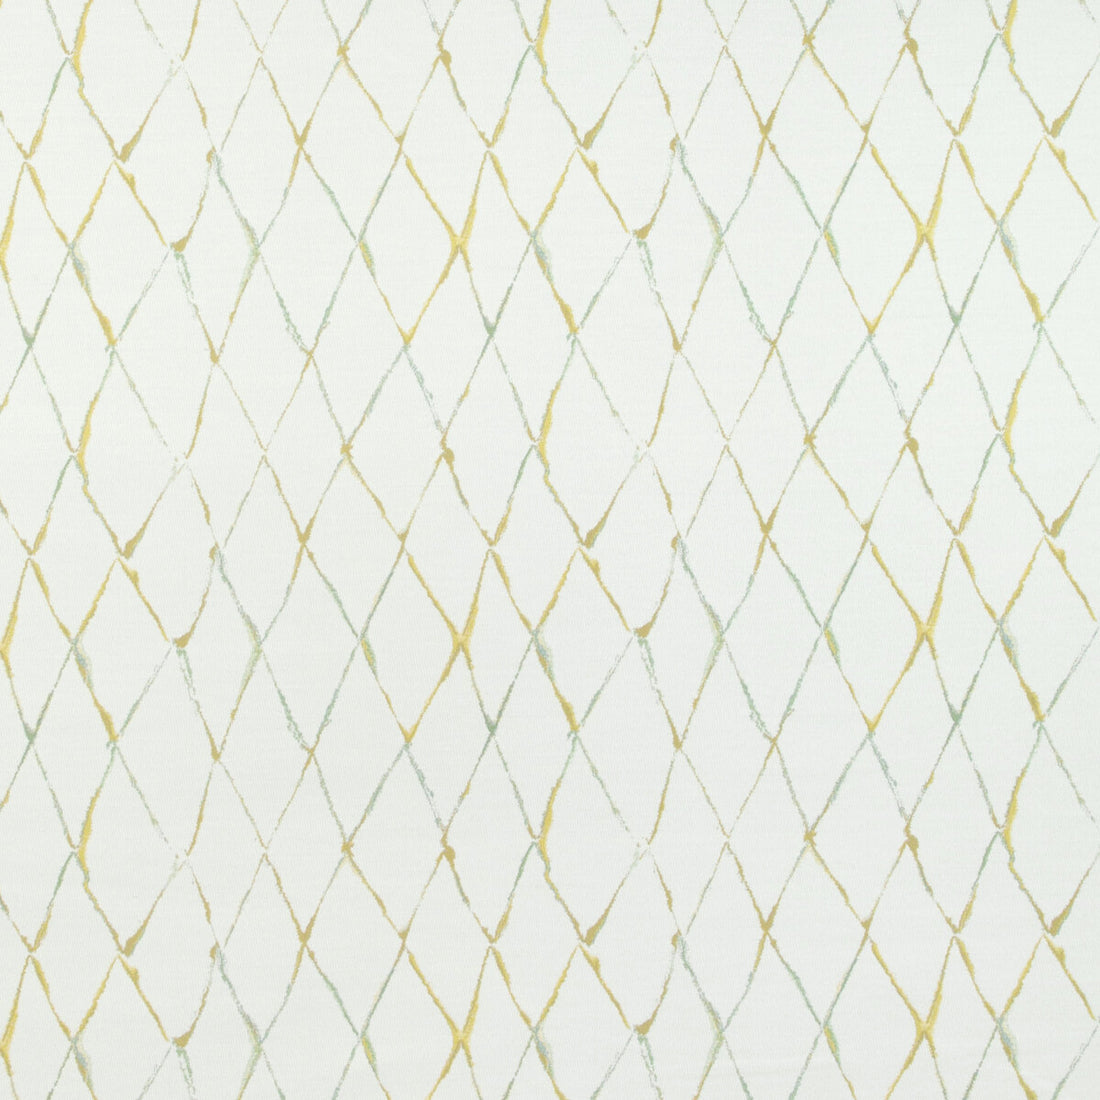 Kravet Design fabric in 36773-314 color - pattern 36773.314.0 - by Kravet Design in the Sea Island Indoor/Outdoor collection